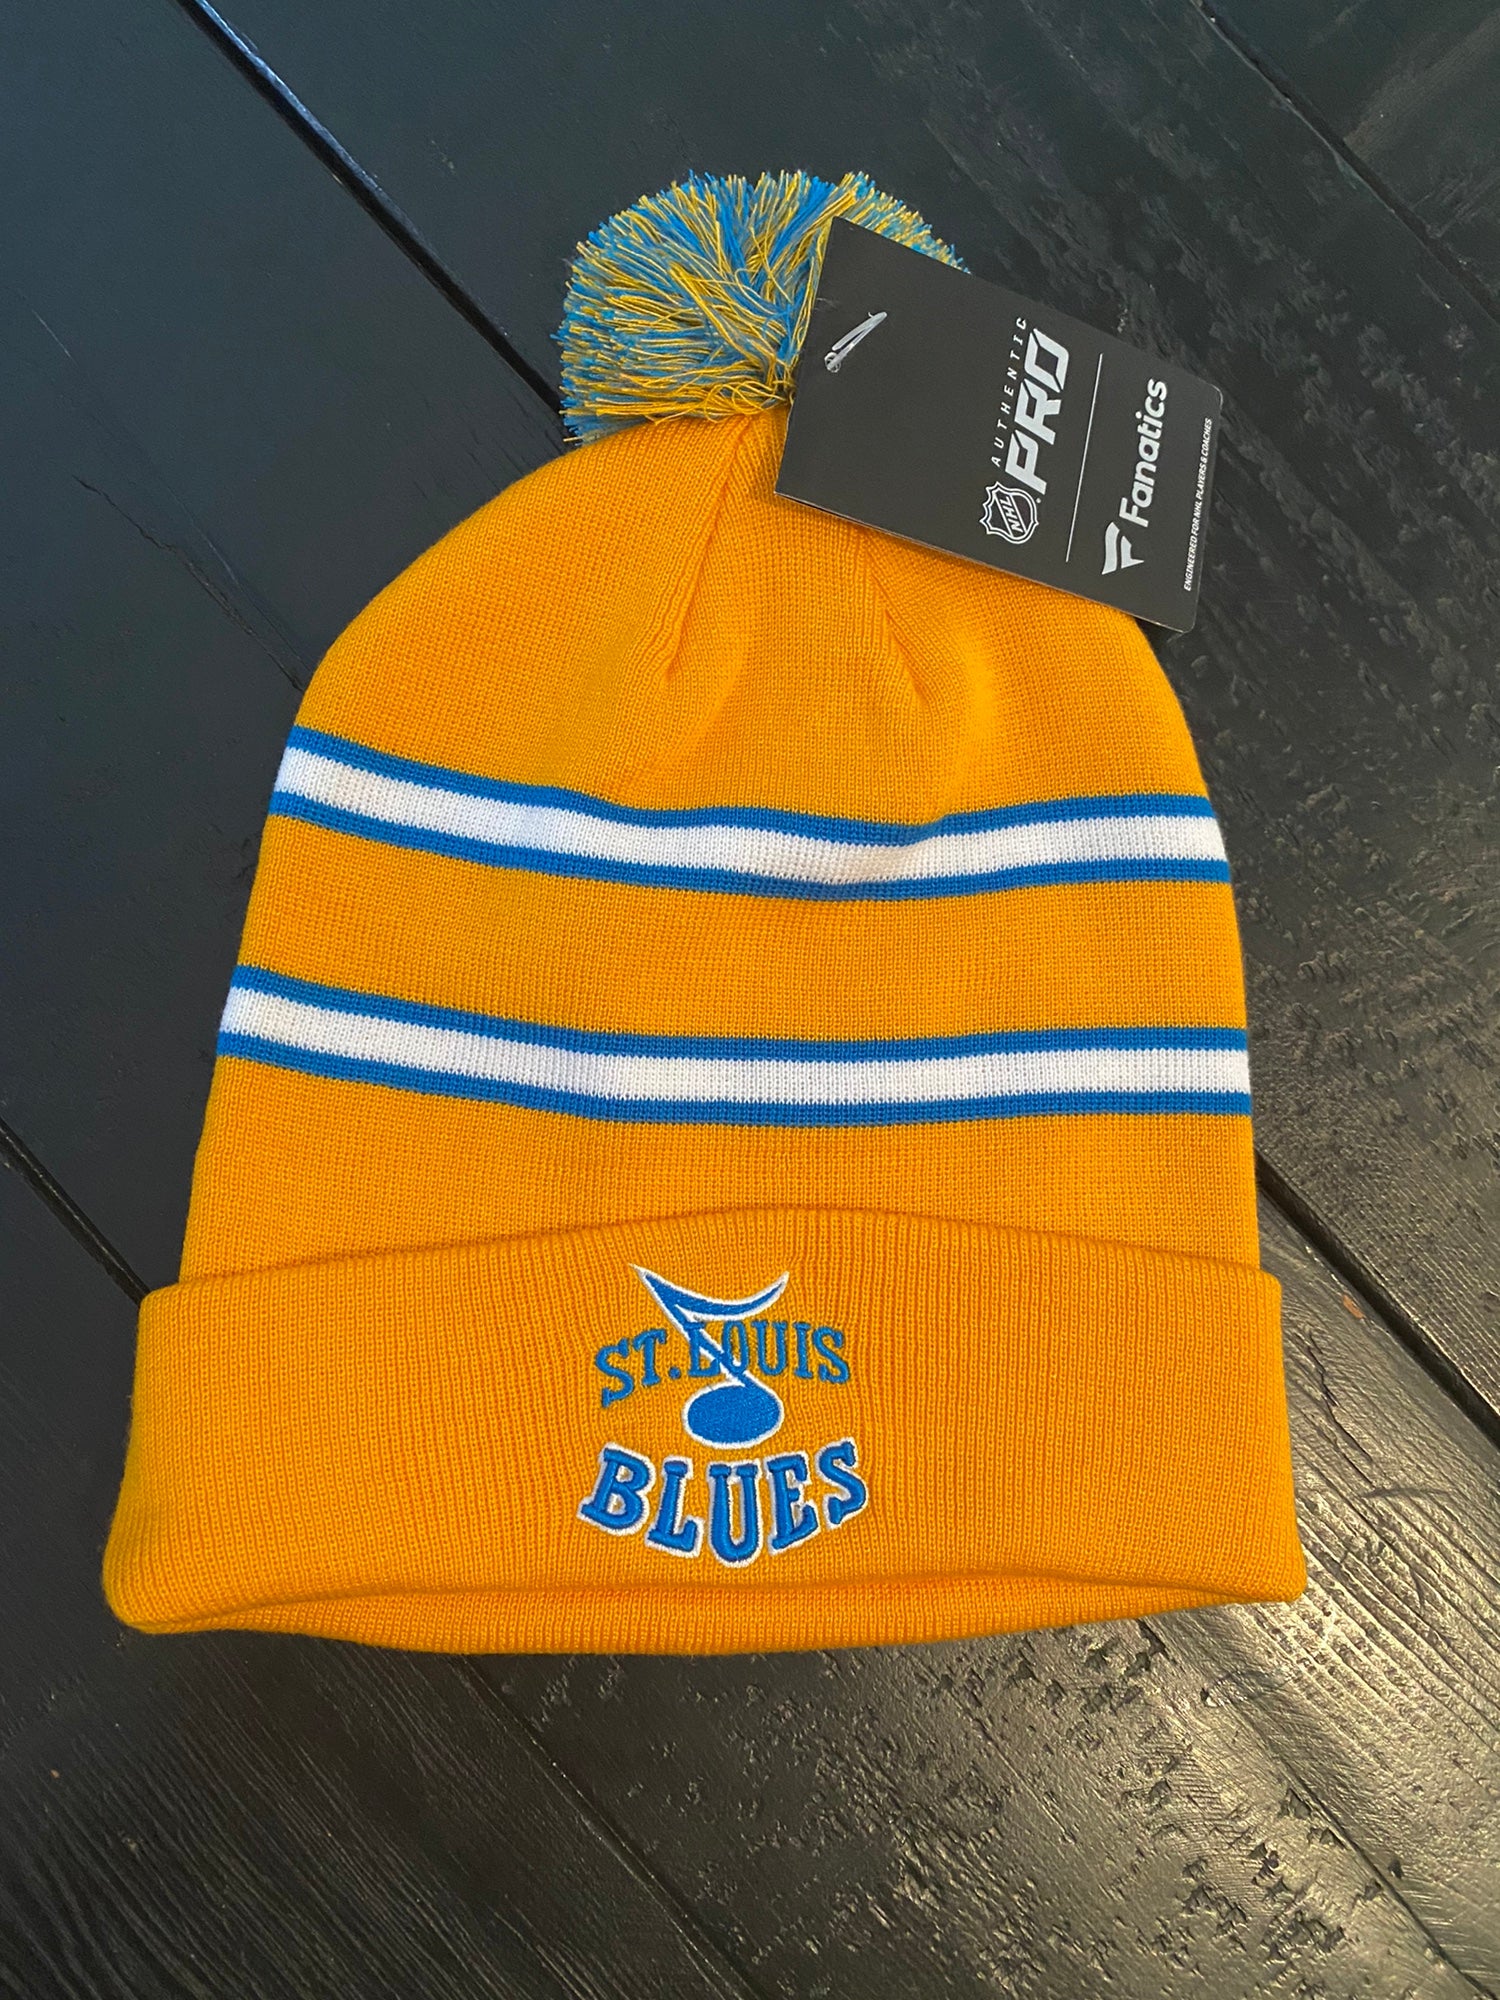 St Louis Blues NHL Adidas Beanie Knit Hat Stocking Cap Winter Hockey